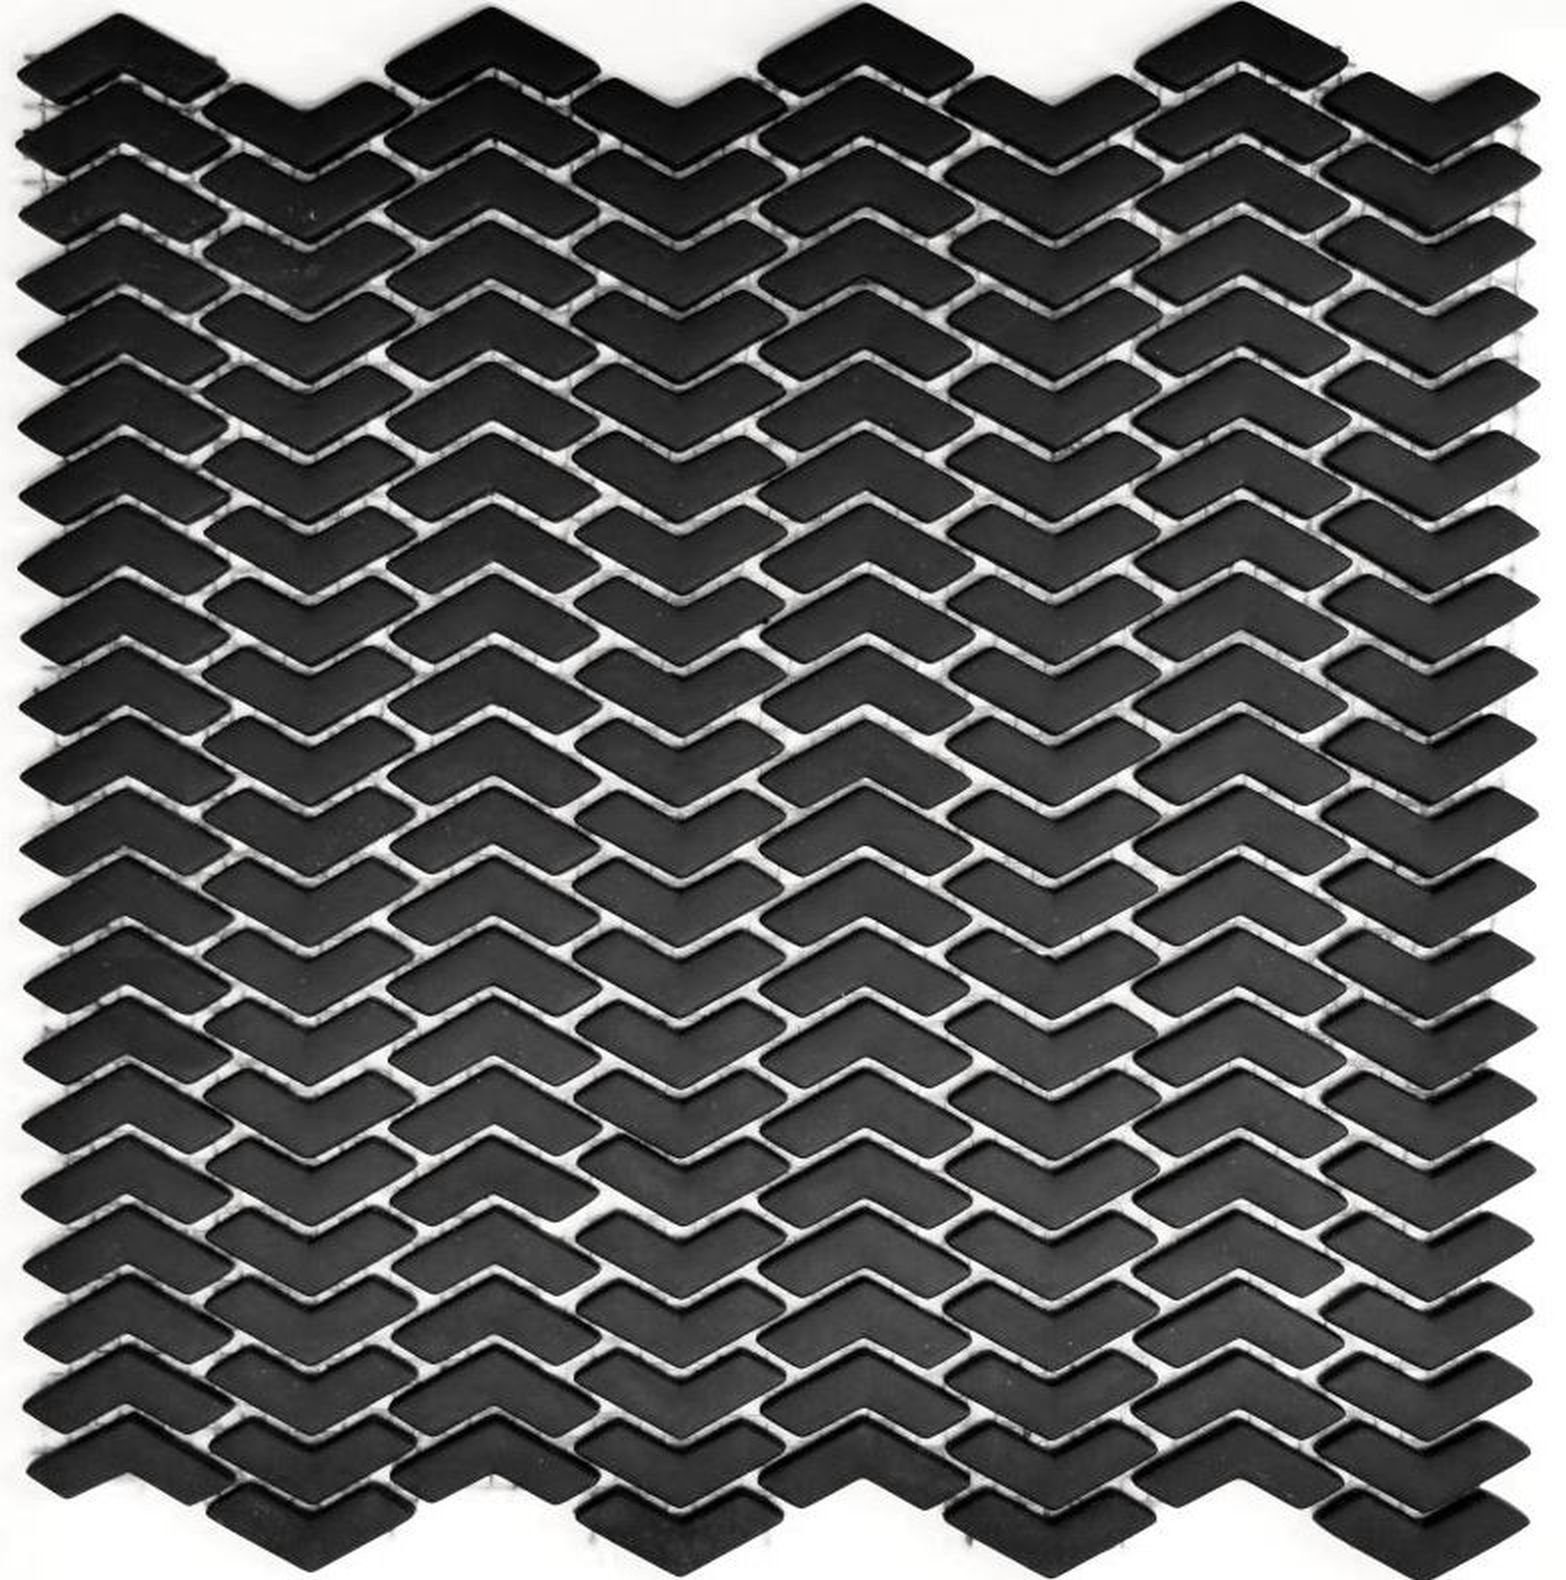 10 Mosaikfliesen Mosaikmatten Mosani Glasmosaik Mosaikfliesen Recycling matt schwarz /